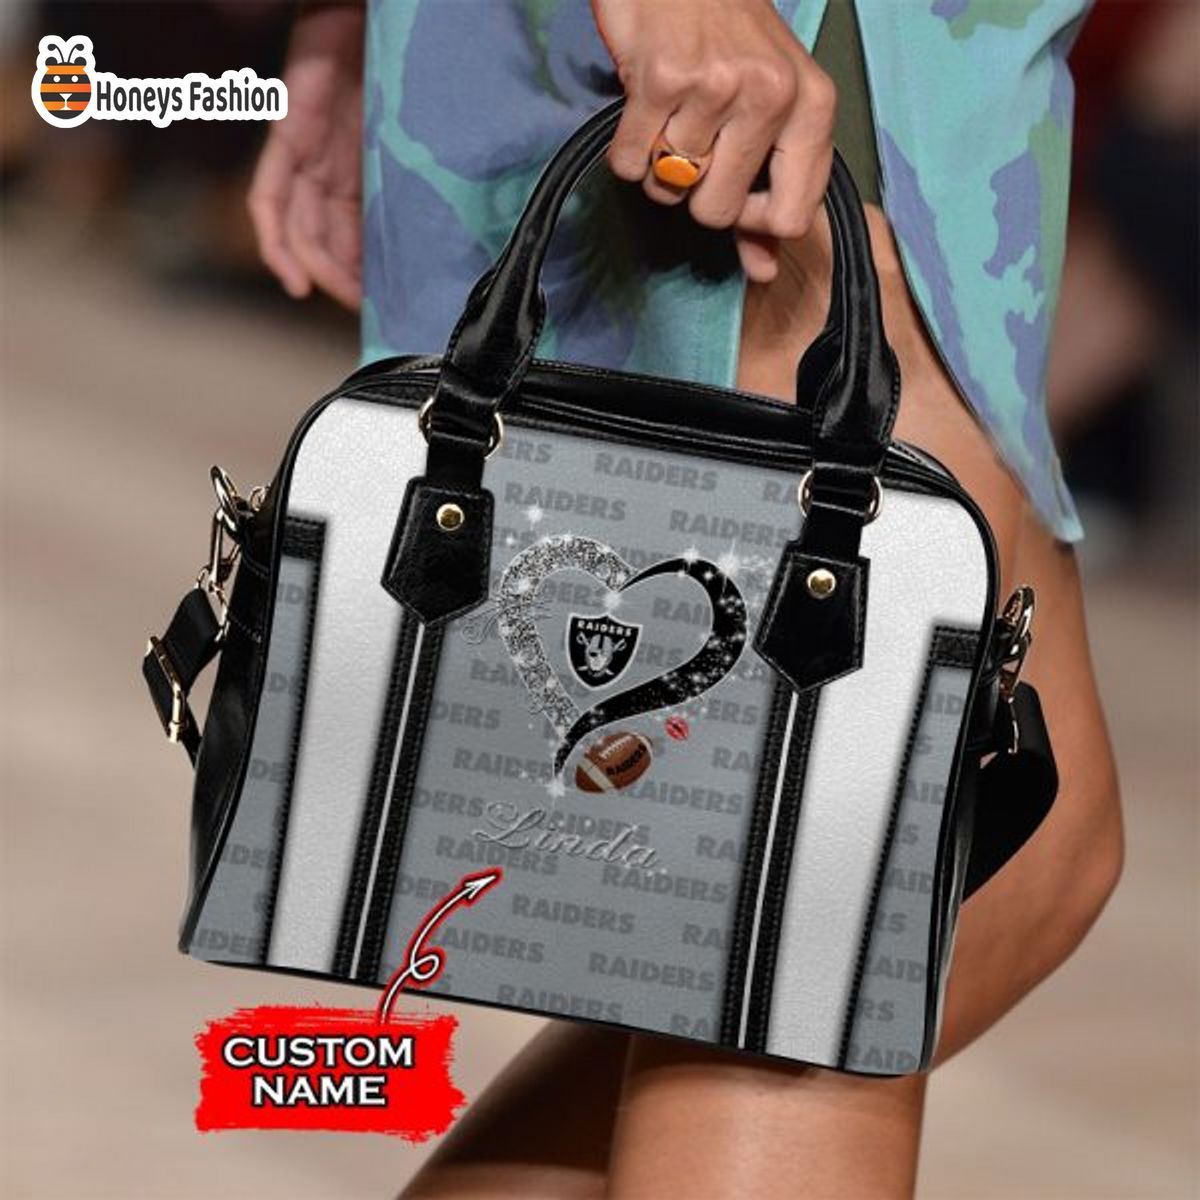 Las Vegas Raiders NFL Custom Name Leather Handbag Tote bag